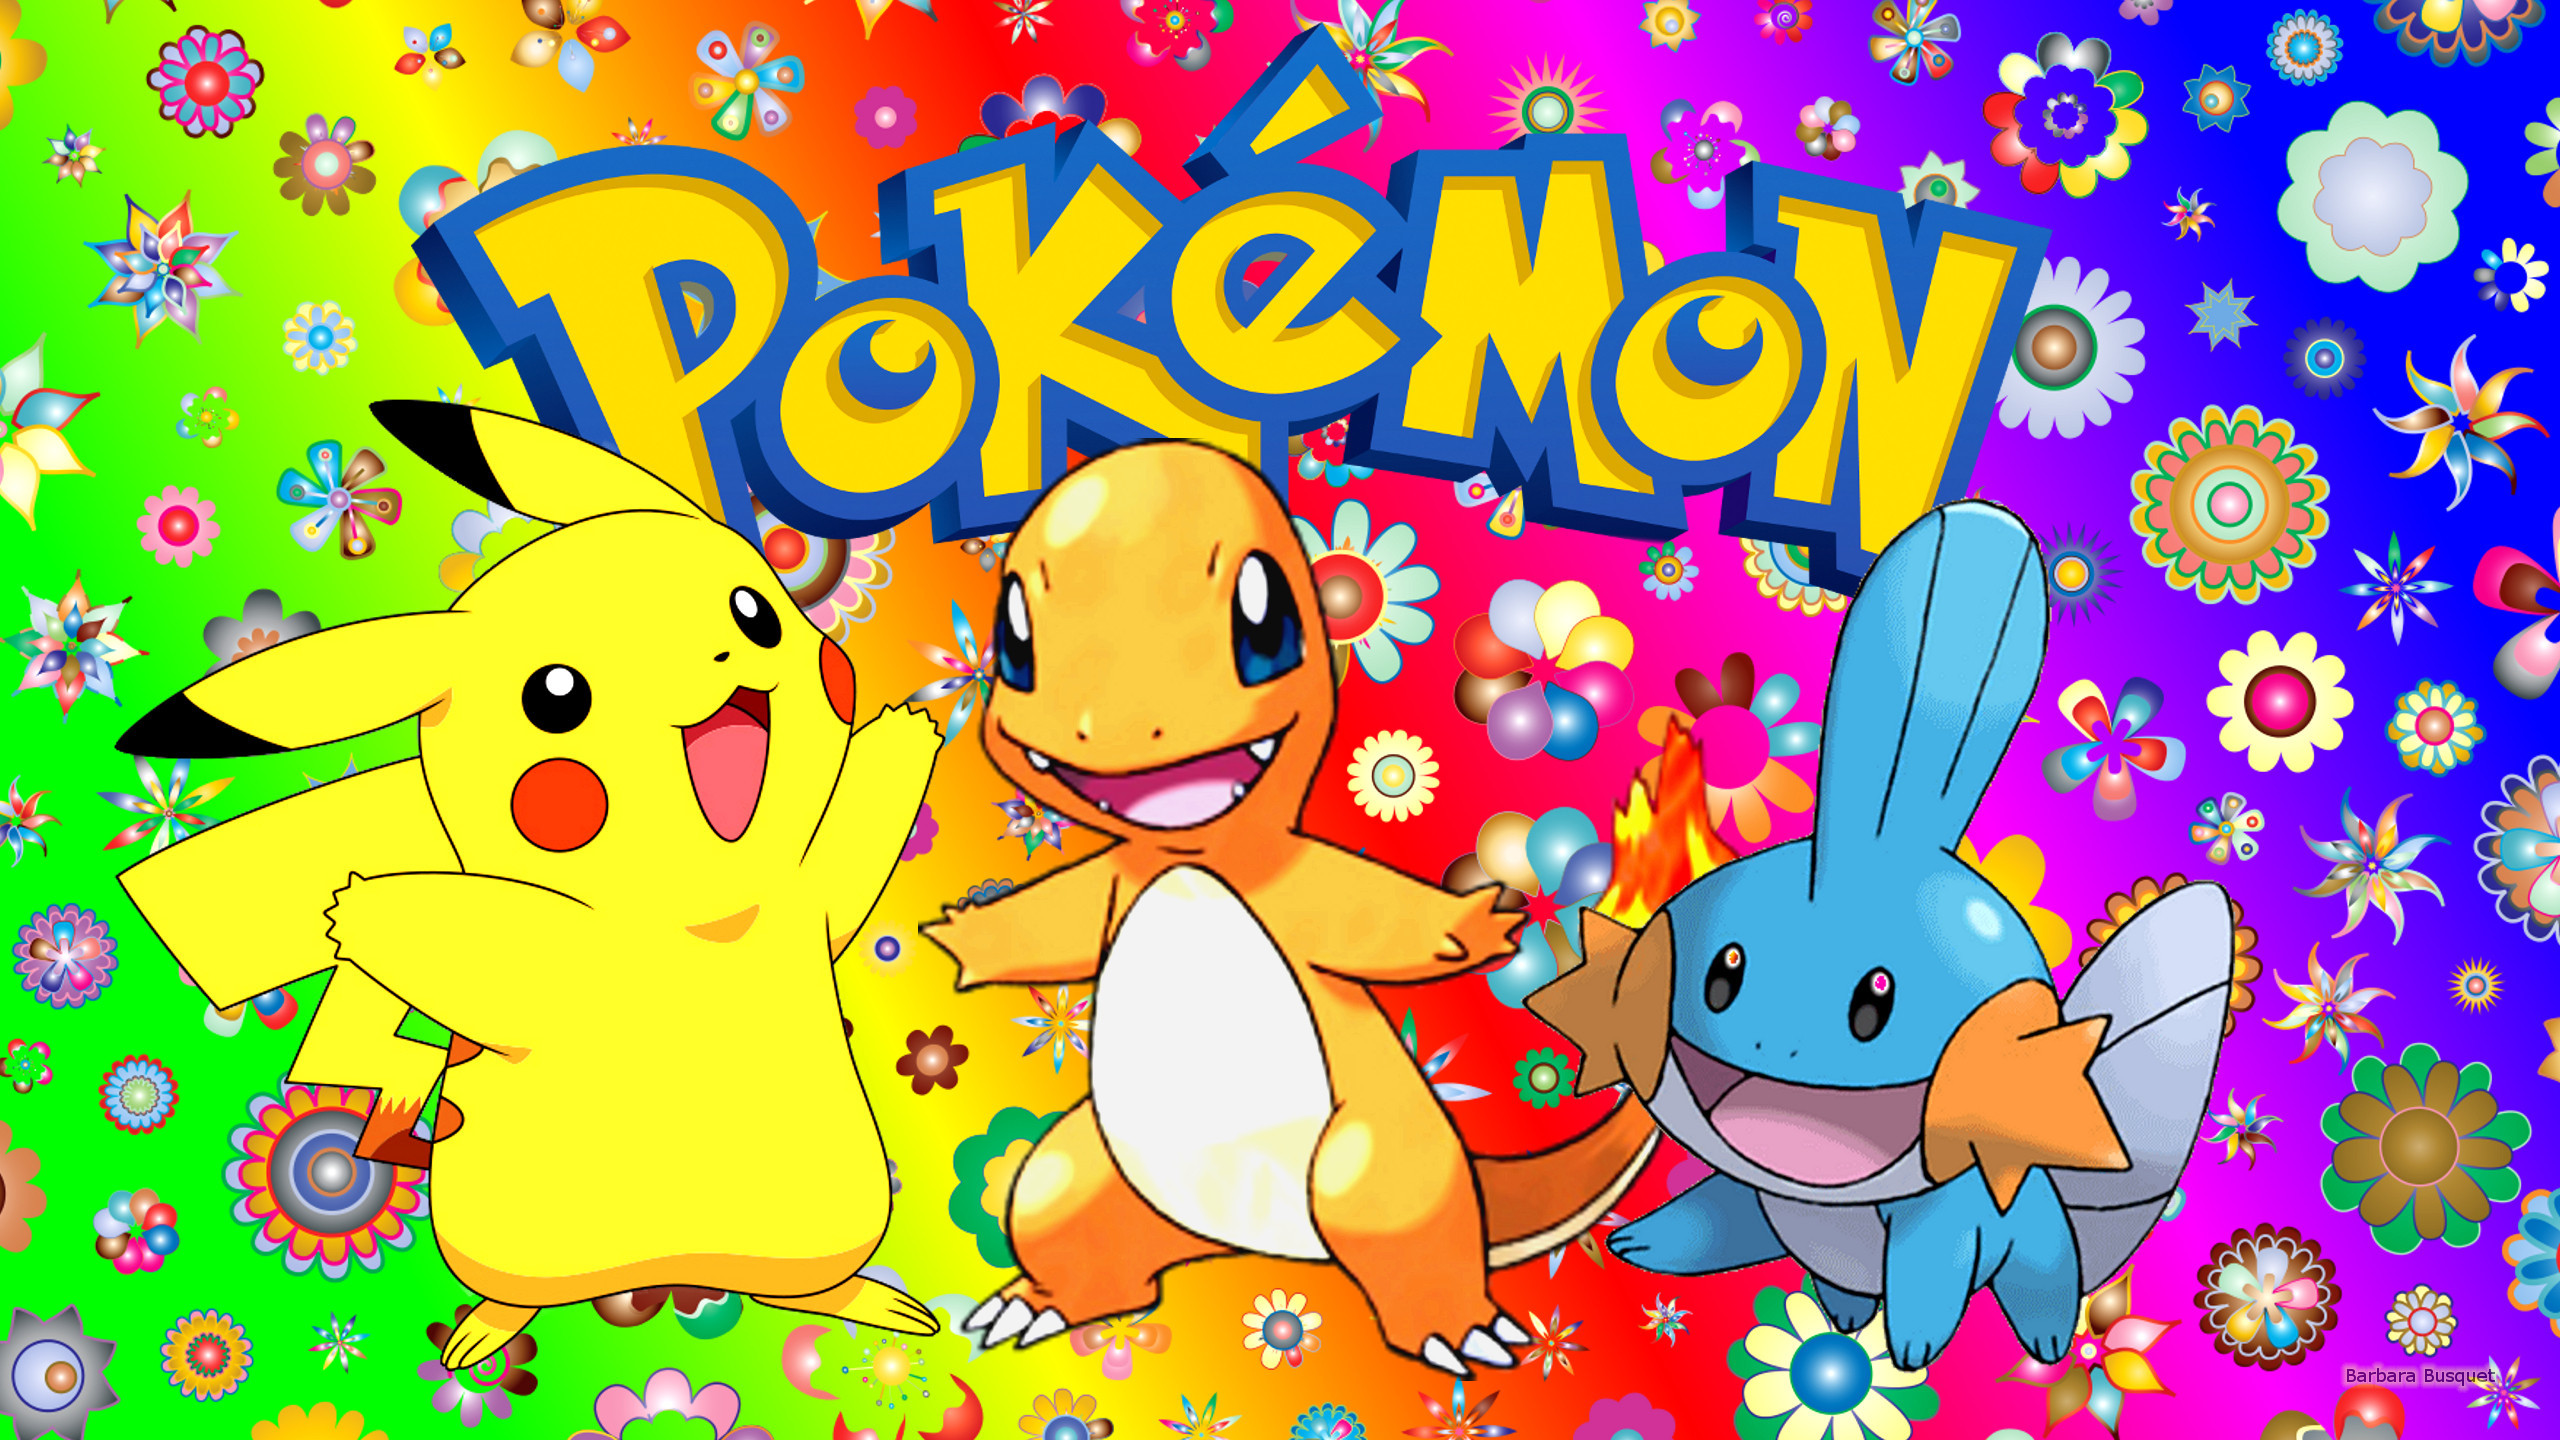 2560x1440 Colorful Pokemon wallpaper with Pikachu, Charmander and Mudkip.